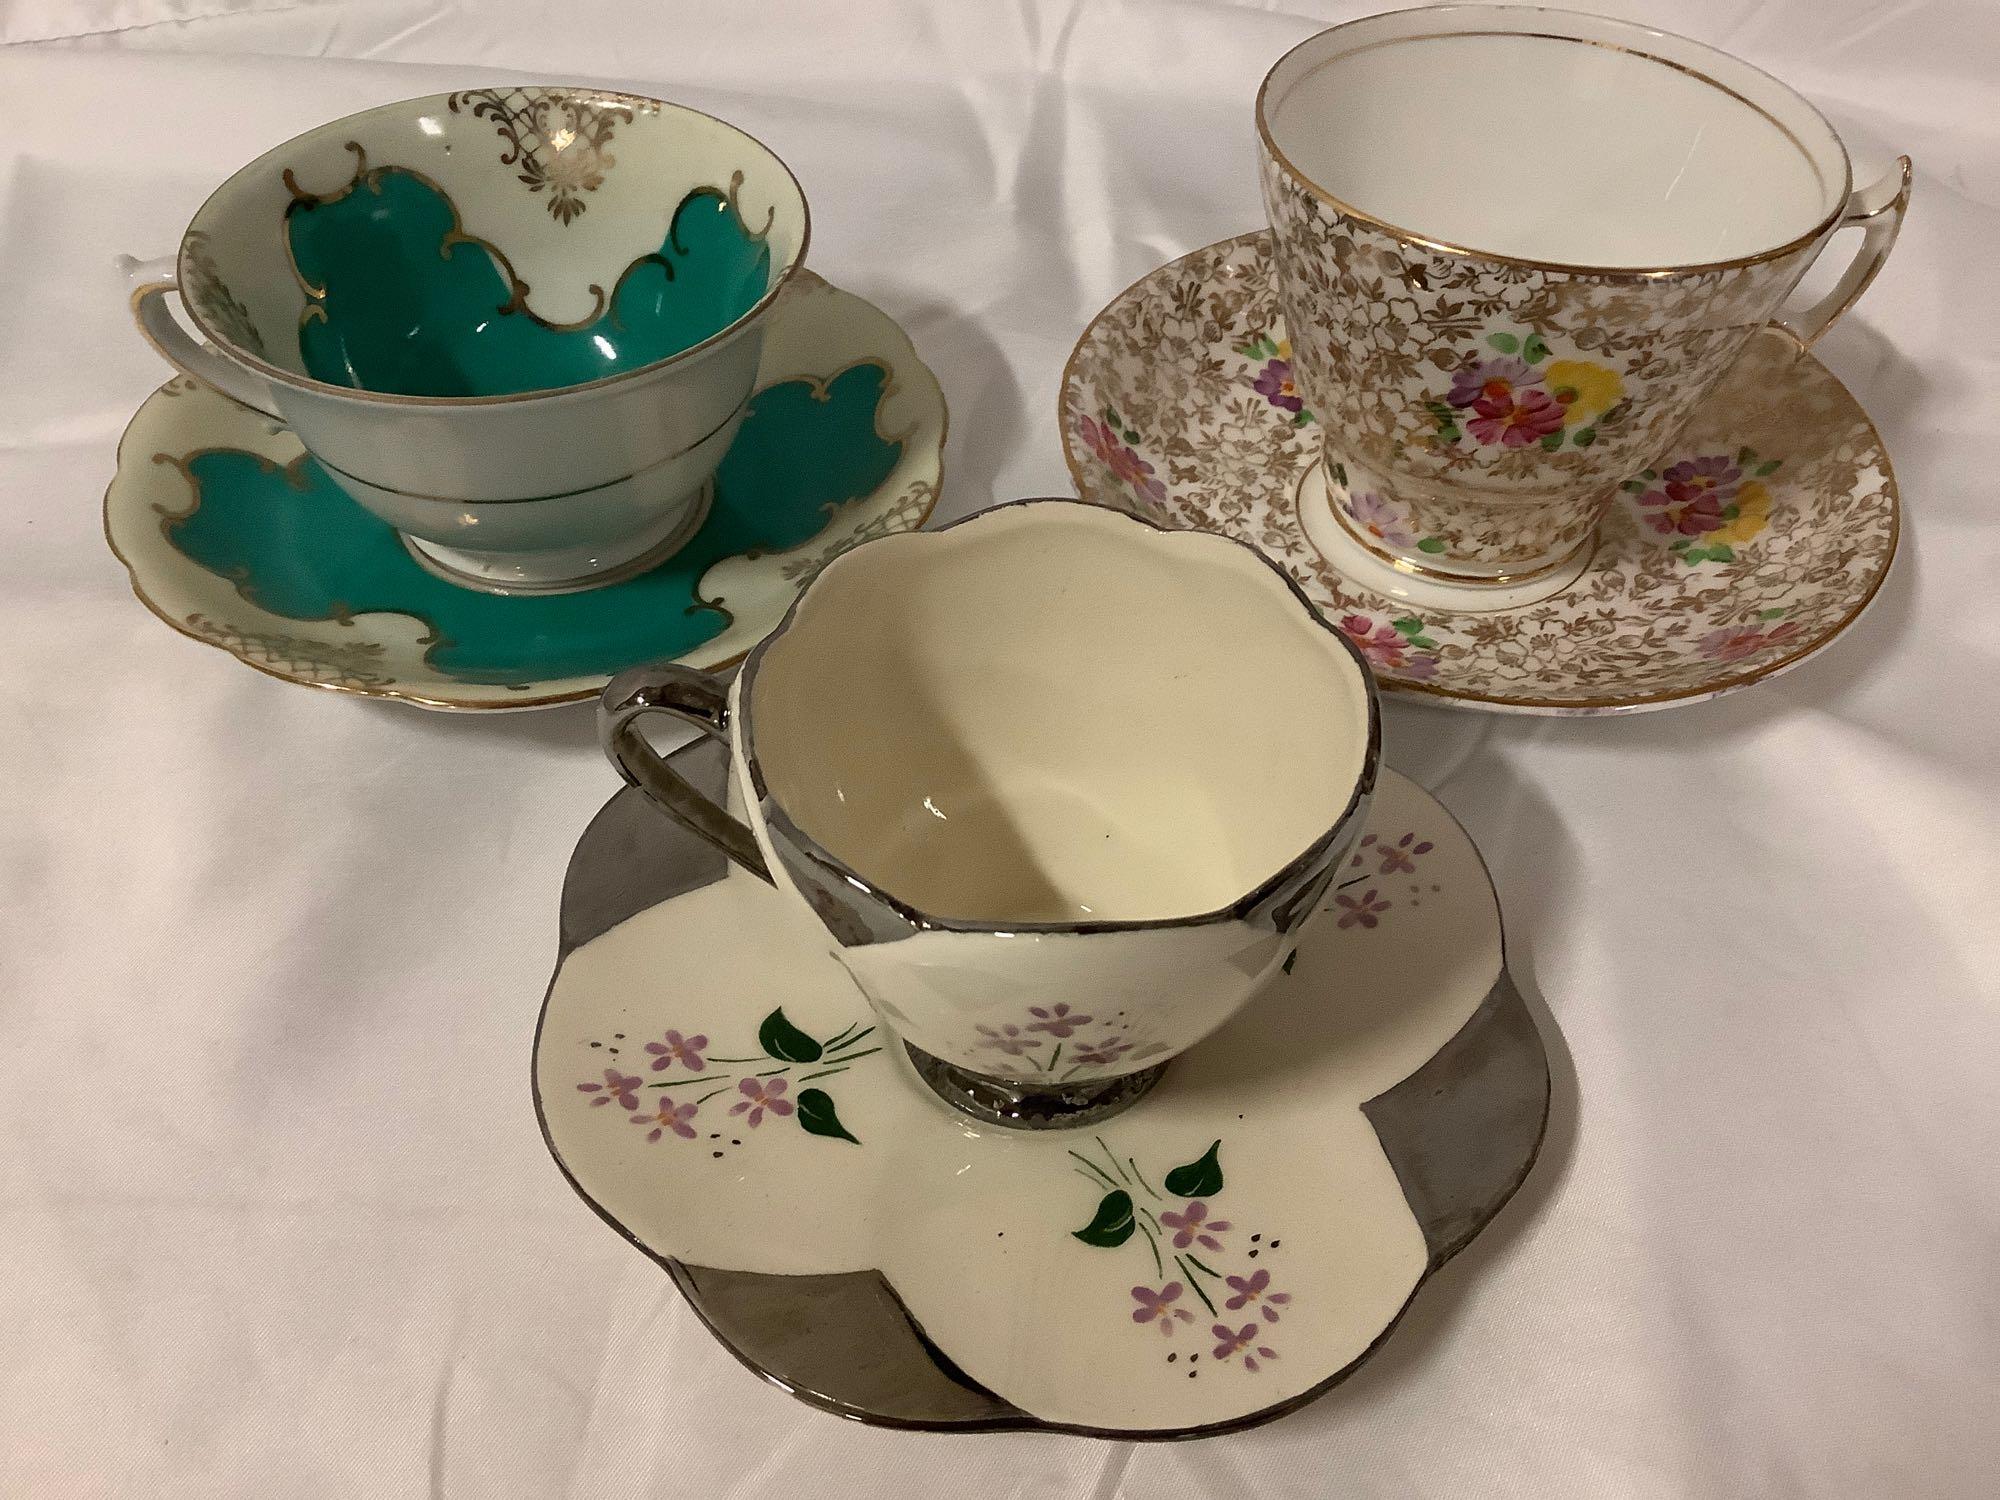 19 vintage fine china tea cup and saucer sets, England, Japan, see pics.